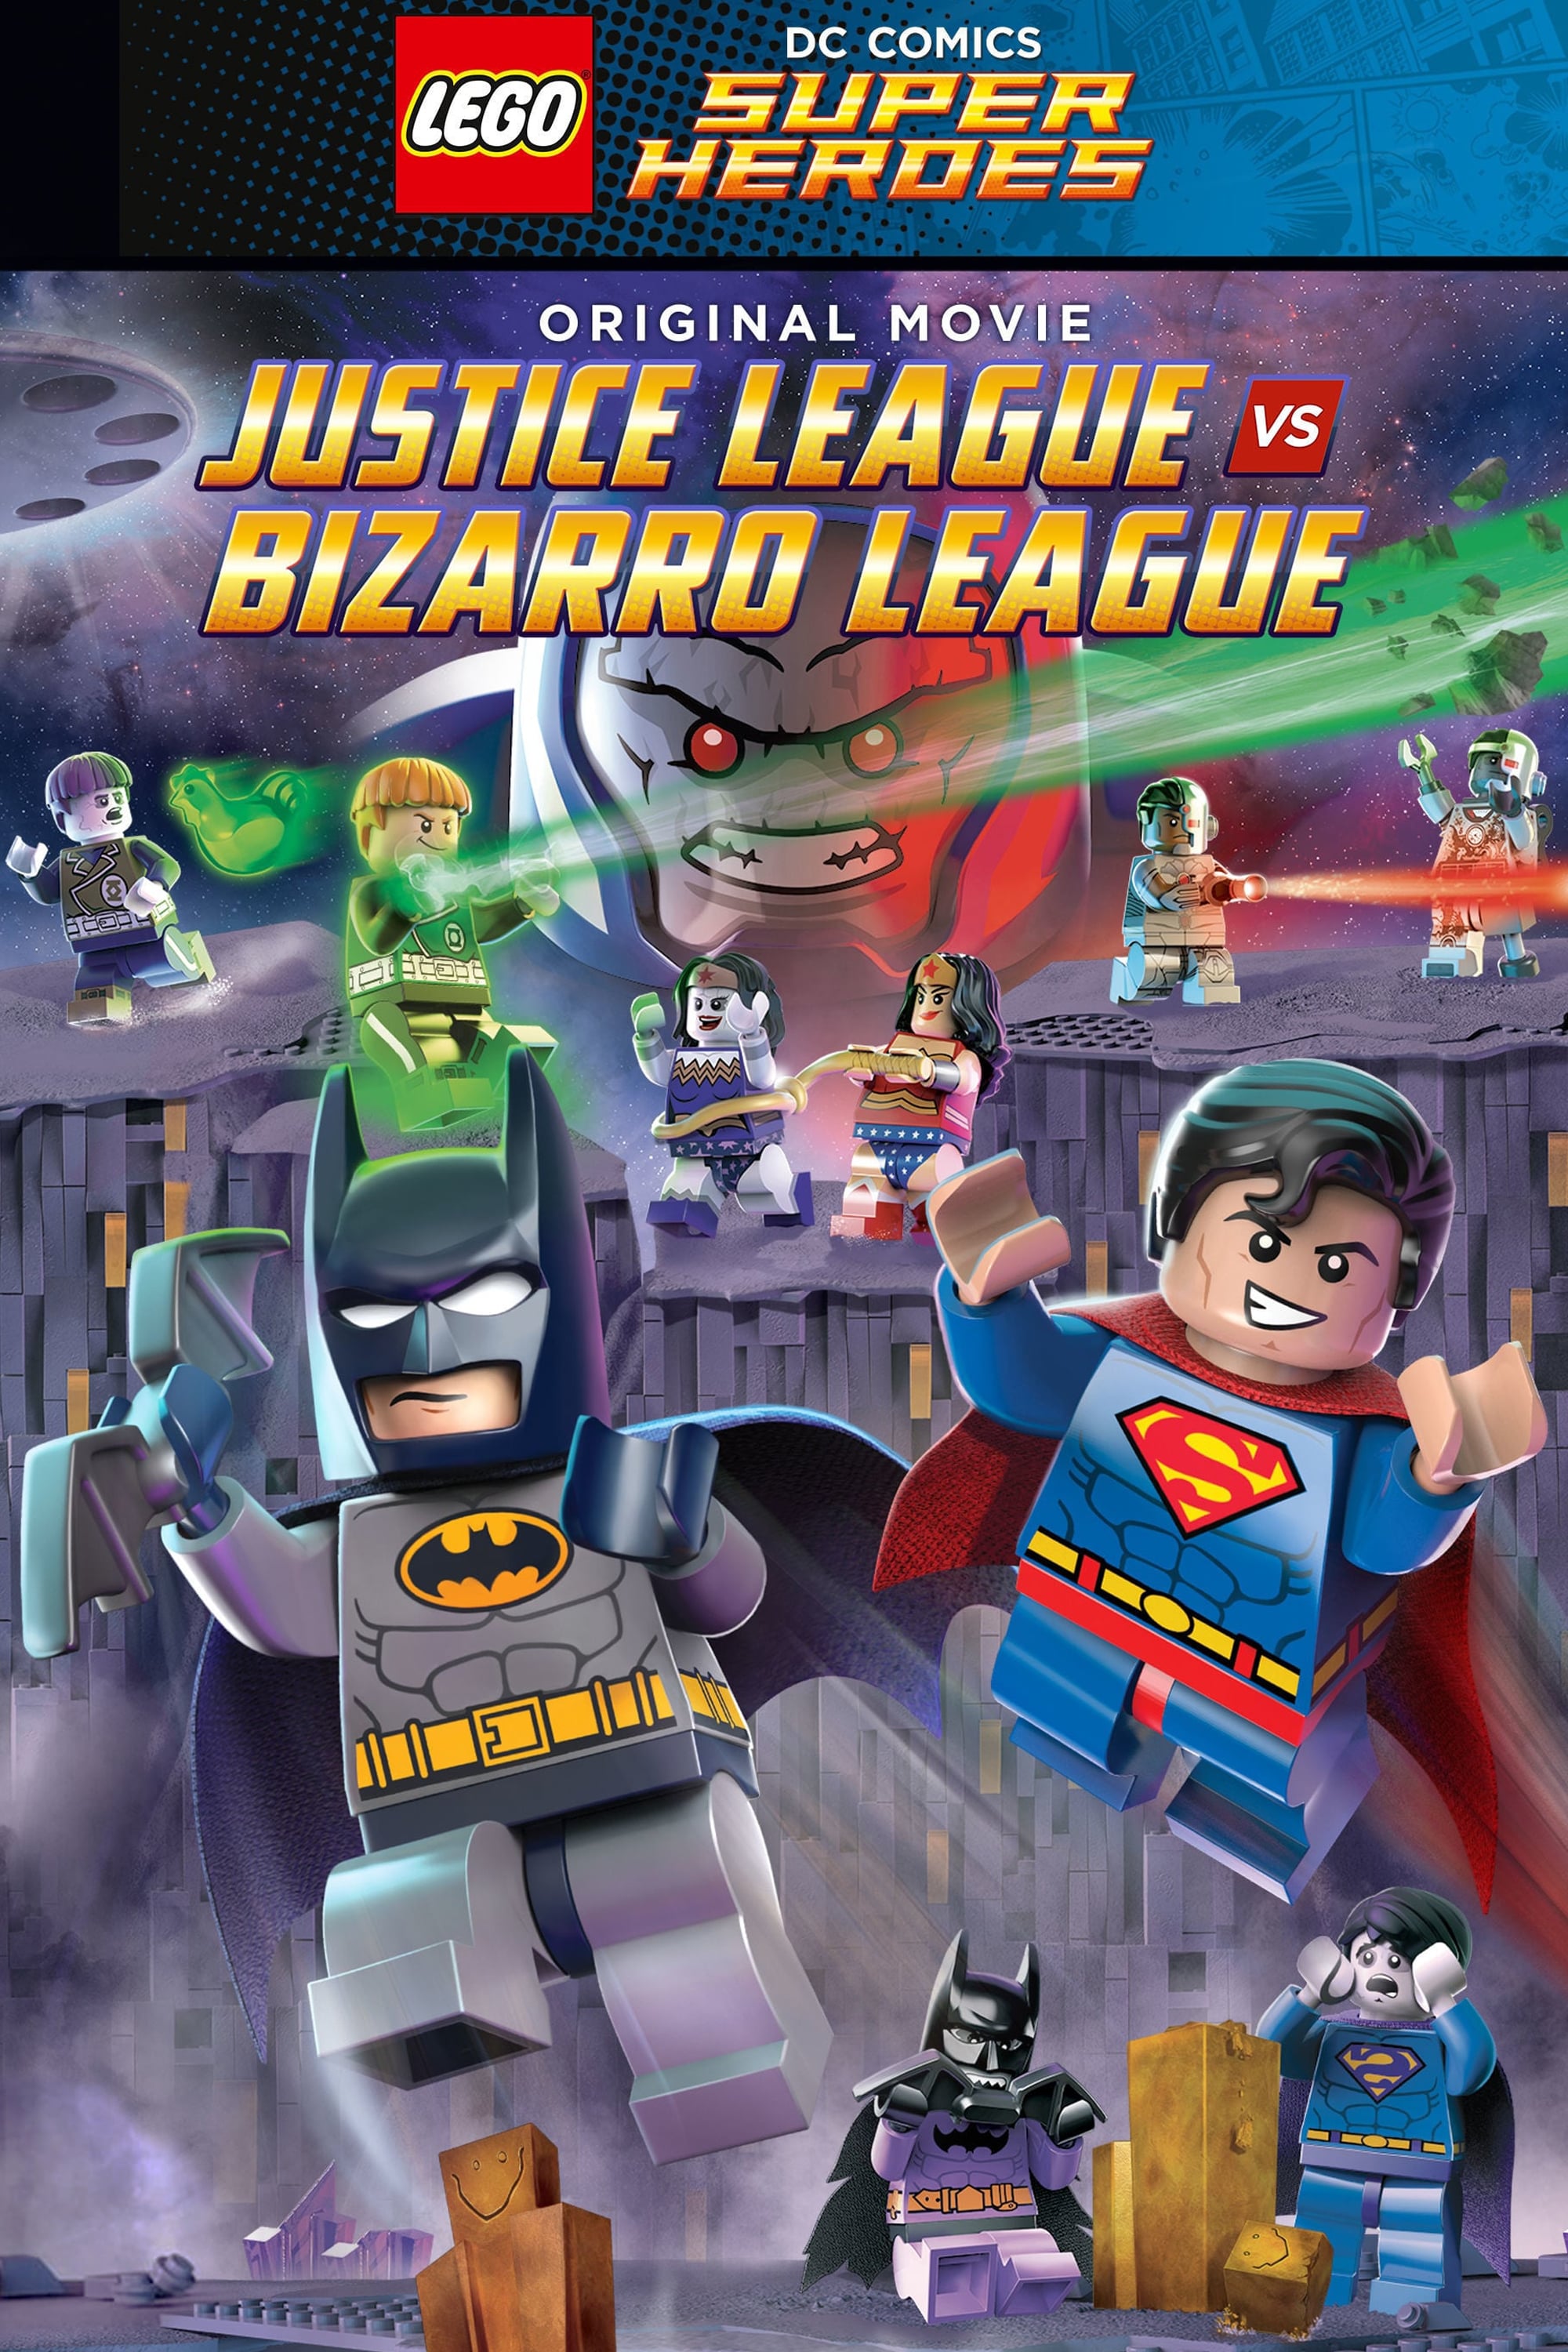 LEGO DC Comics Super Heróis: Liga da Justiça vs Liga Bizarro (2015)